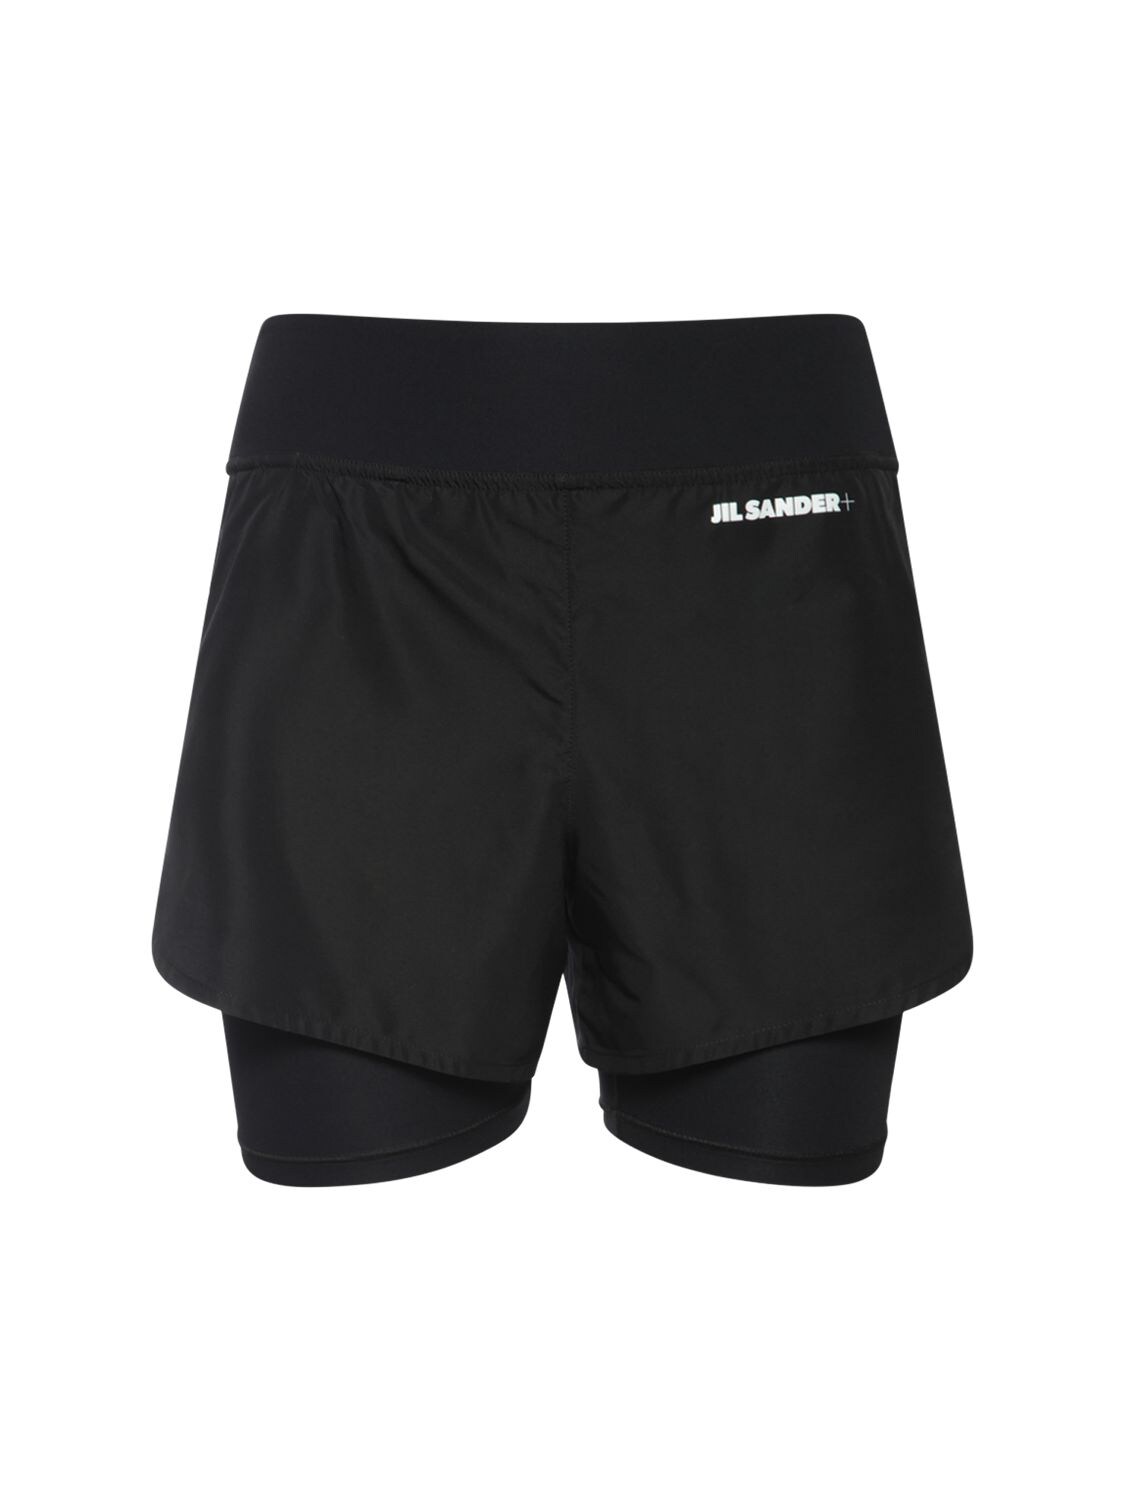 JIL SANDER Logo Tech Layered Running Shorts